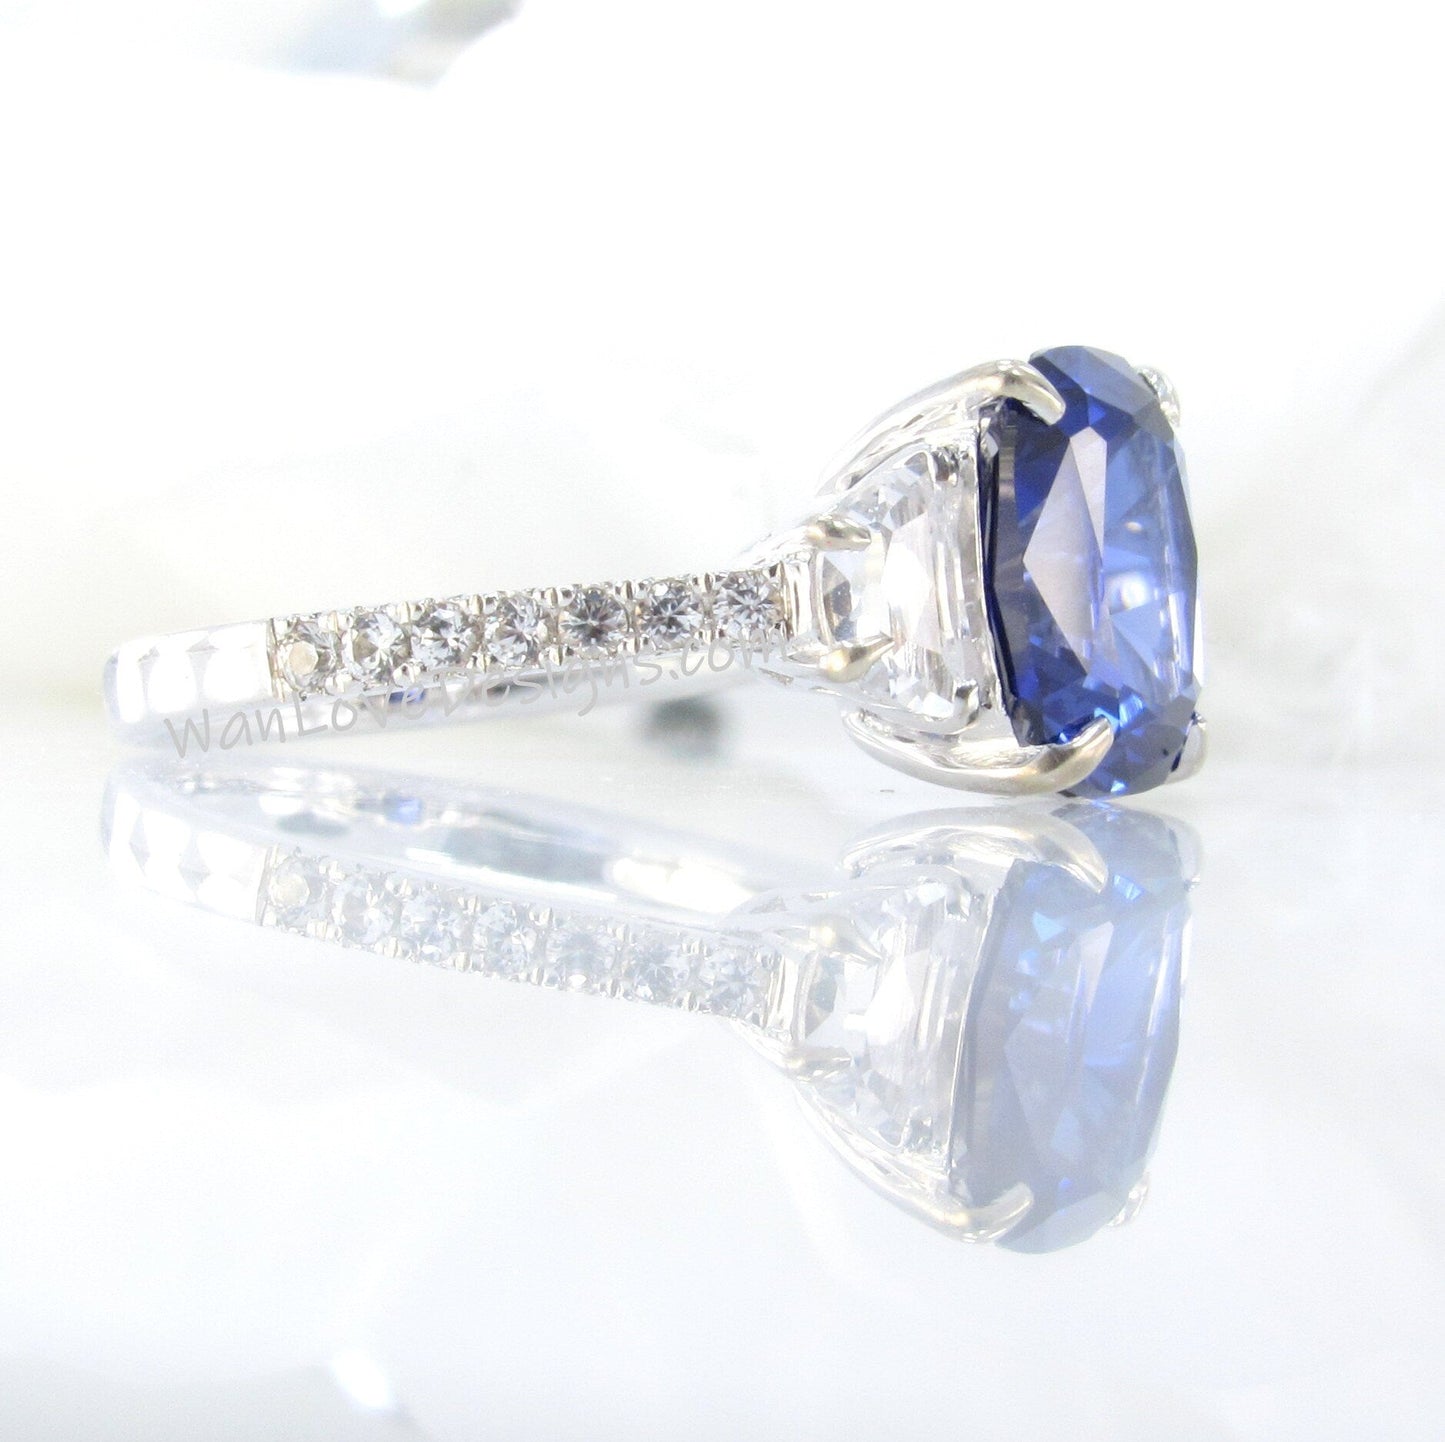 Blue Sapphire Diamond Moissanite Engagement Ring, Elongated Cushion, Half moon, 4ct, 10x8mm, Custom,14k 18k White Yellow Rose Gold,Platinum Wan Love Designs